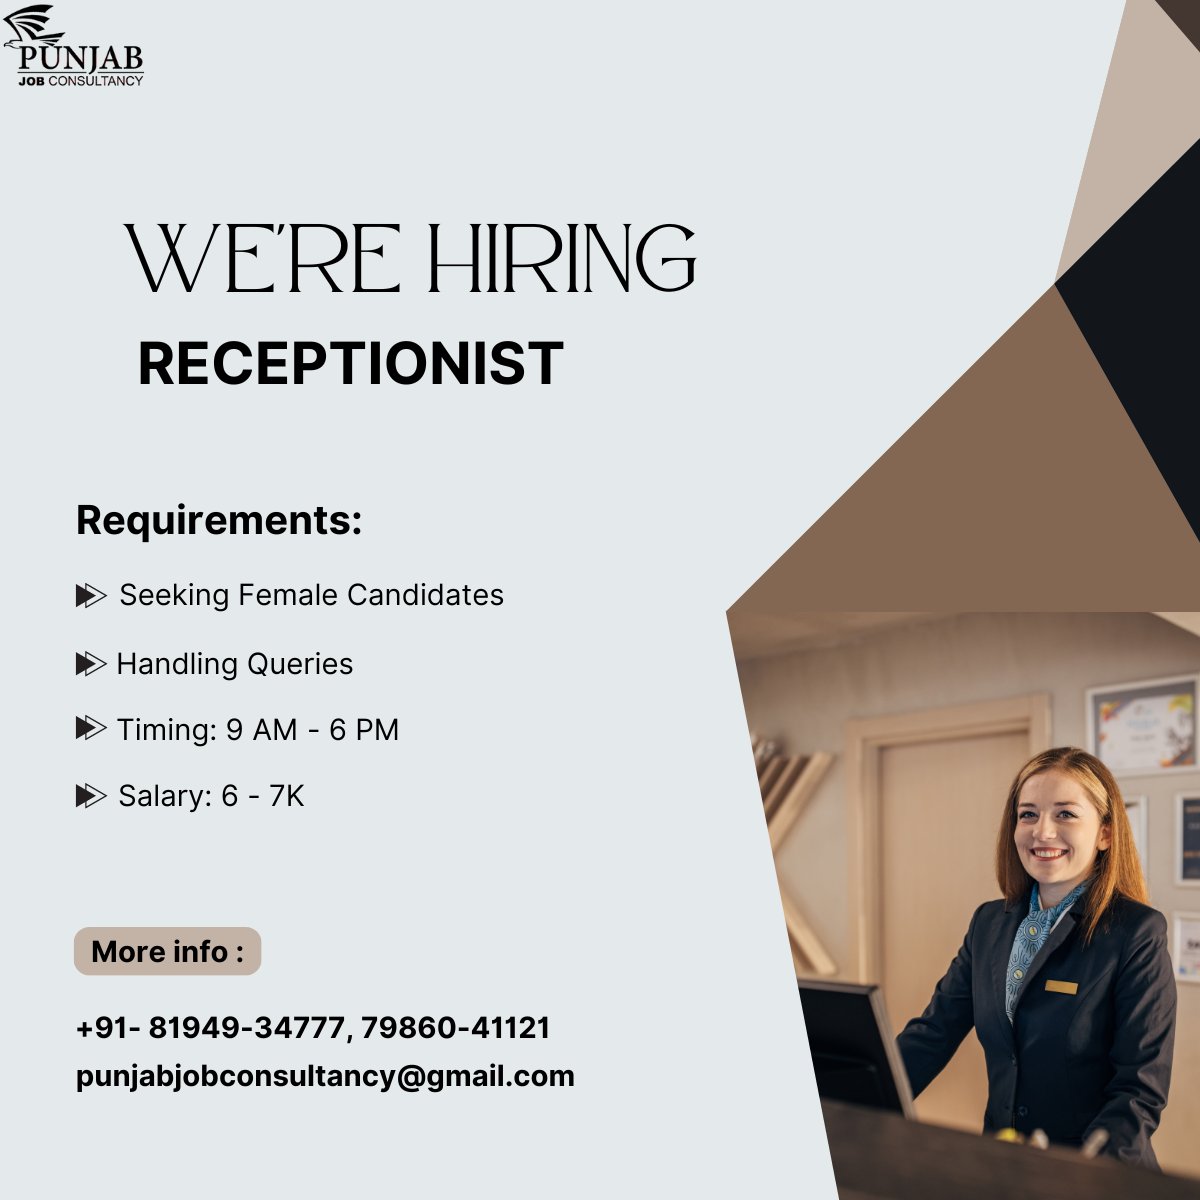 👀 We're Looking for a #Receptionist
📞 Contact Us: 81949-34777, 79860-41121
Share your CV: punjabjobconsultancy@gmail.com
#Receptionist #FrontDeskExecutive #JobinHoshiarpur #HoshiarpurJobs #PunjabJobs #FrontDeskJobs